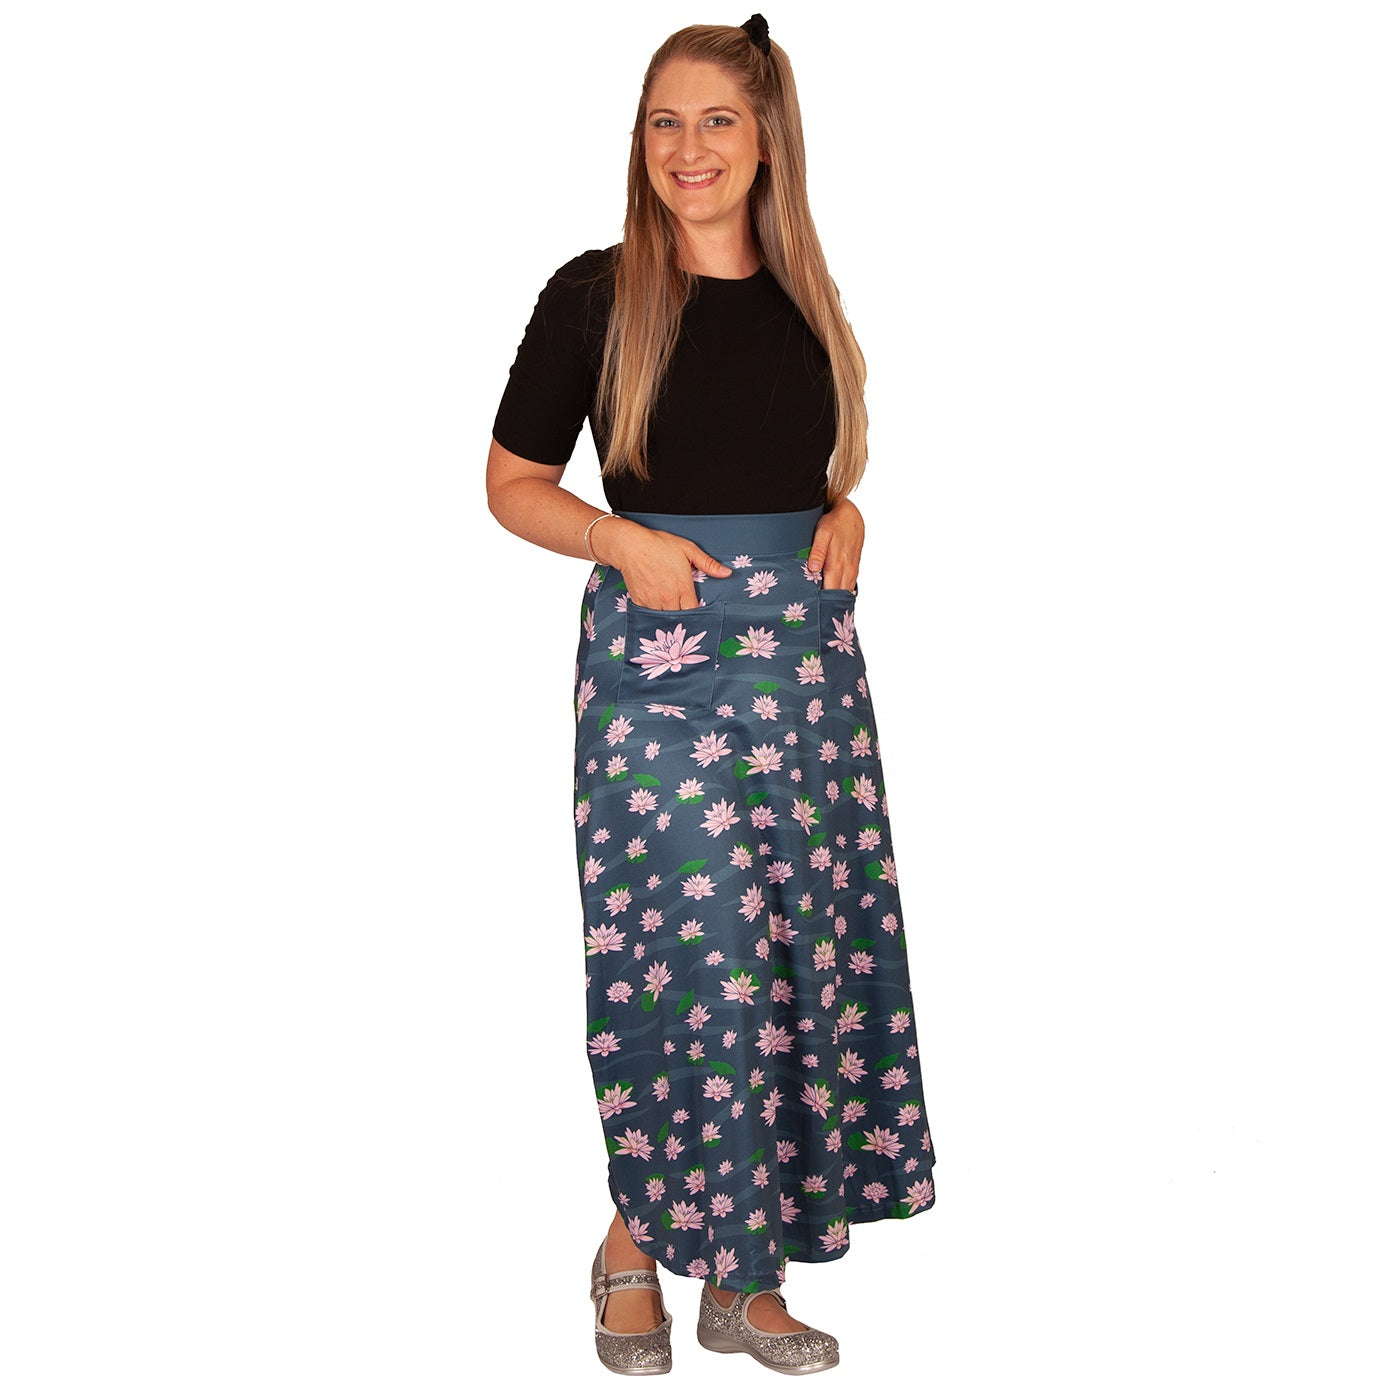 Serene Maxi Skirt by RainbowsAndFairies.com.au (Lotus Flower - Meditation - Yoga - Floral - Skirt With Pockets - Boho - Mod Retro - Vintage Inspired) - SKU: CL_MAXIS_SEREN_ORG - Pic-03